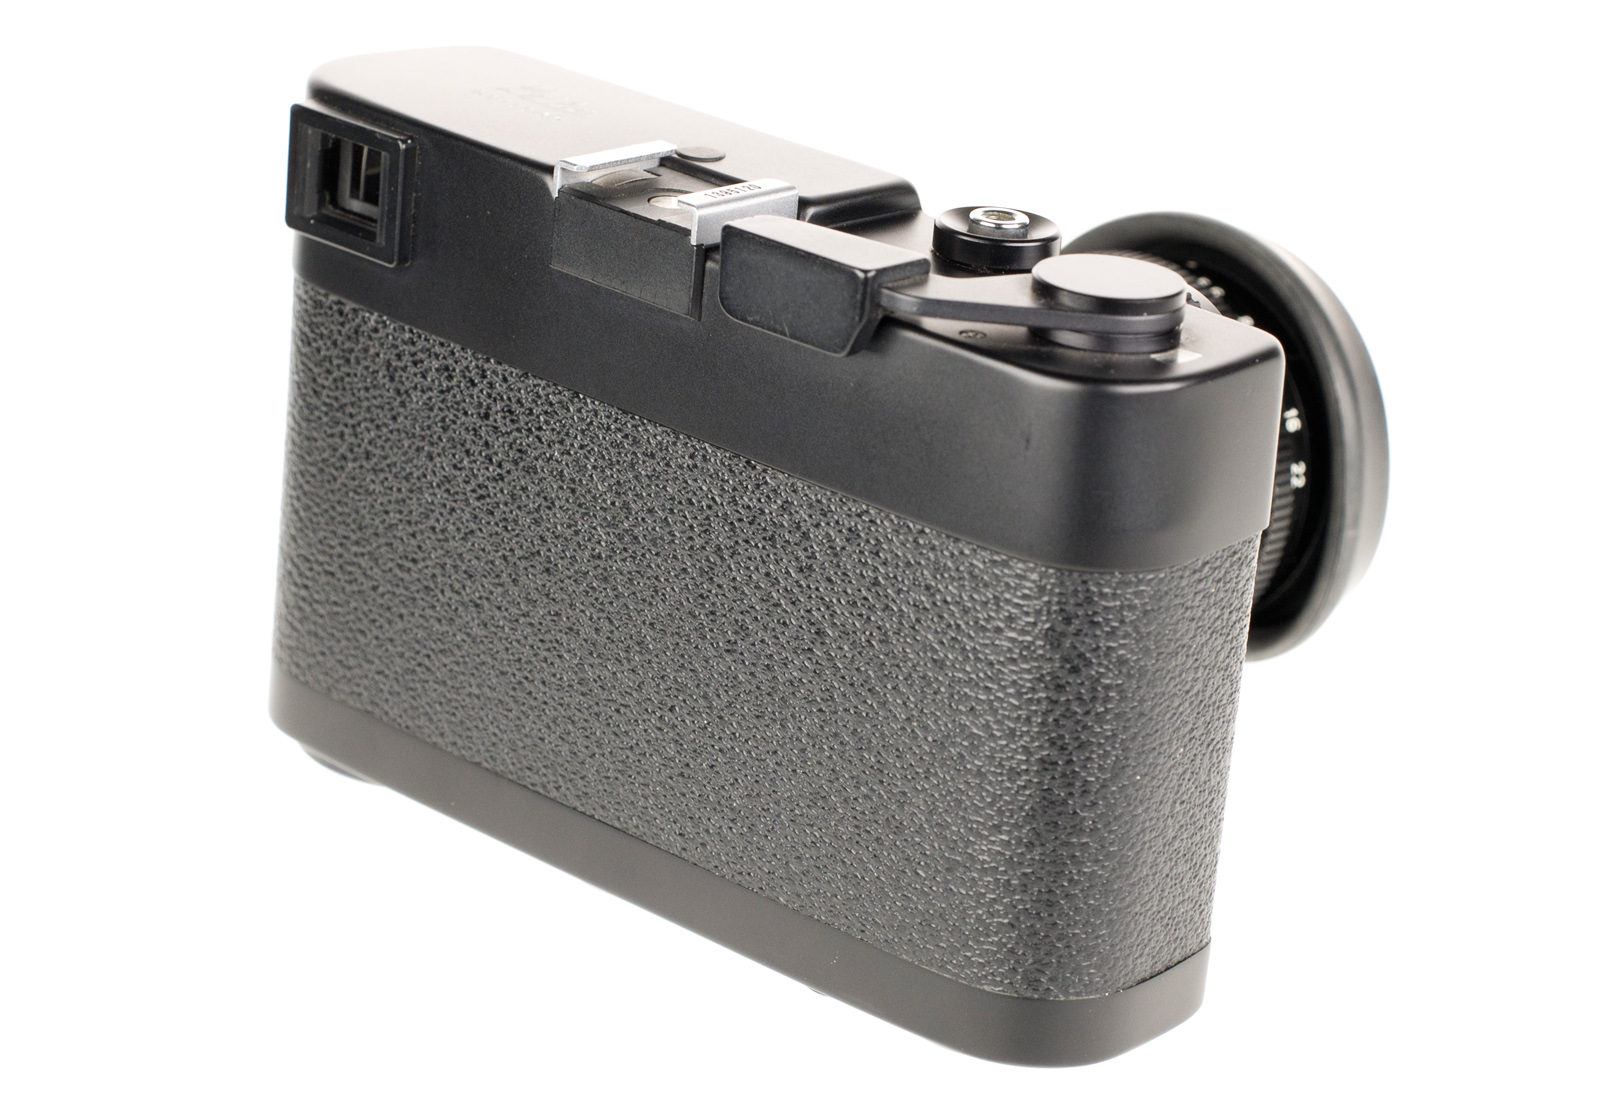 Leica CL + Elmar-C 1:4/90mm, black 10700